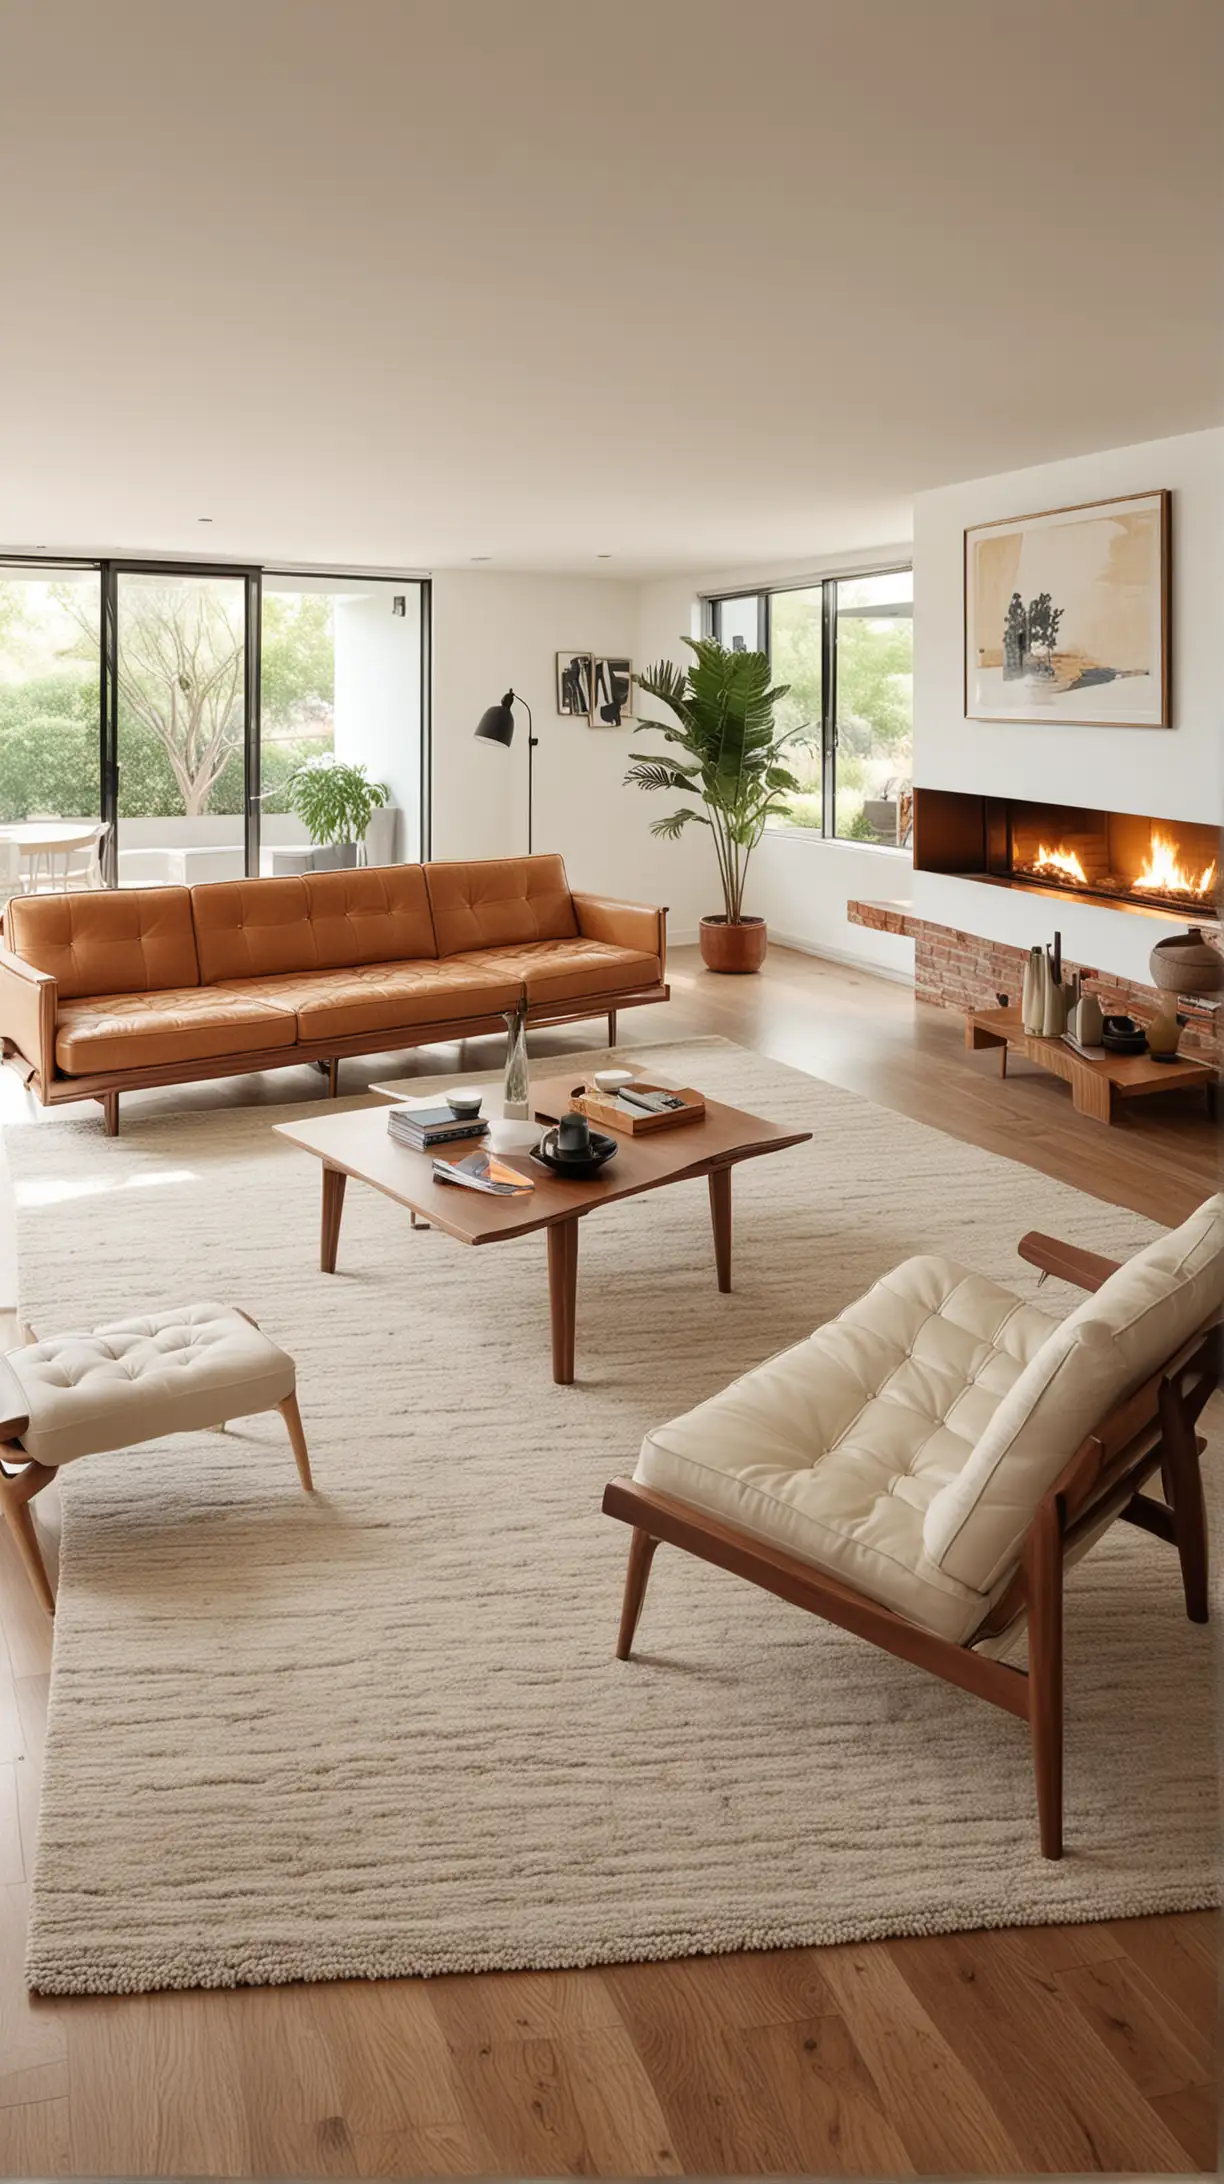 Chic Midcentury Modern Living Room with Minimalist Design